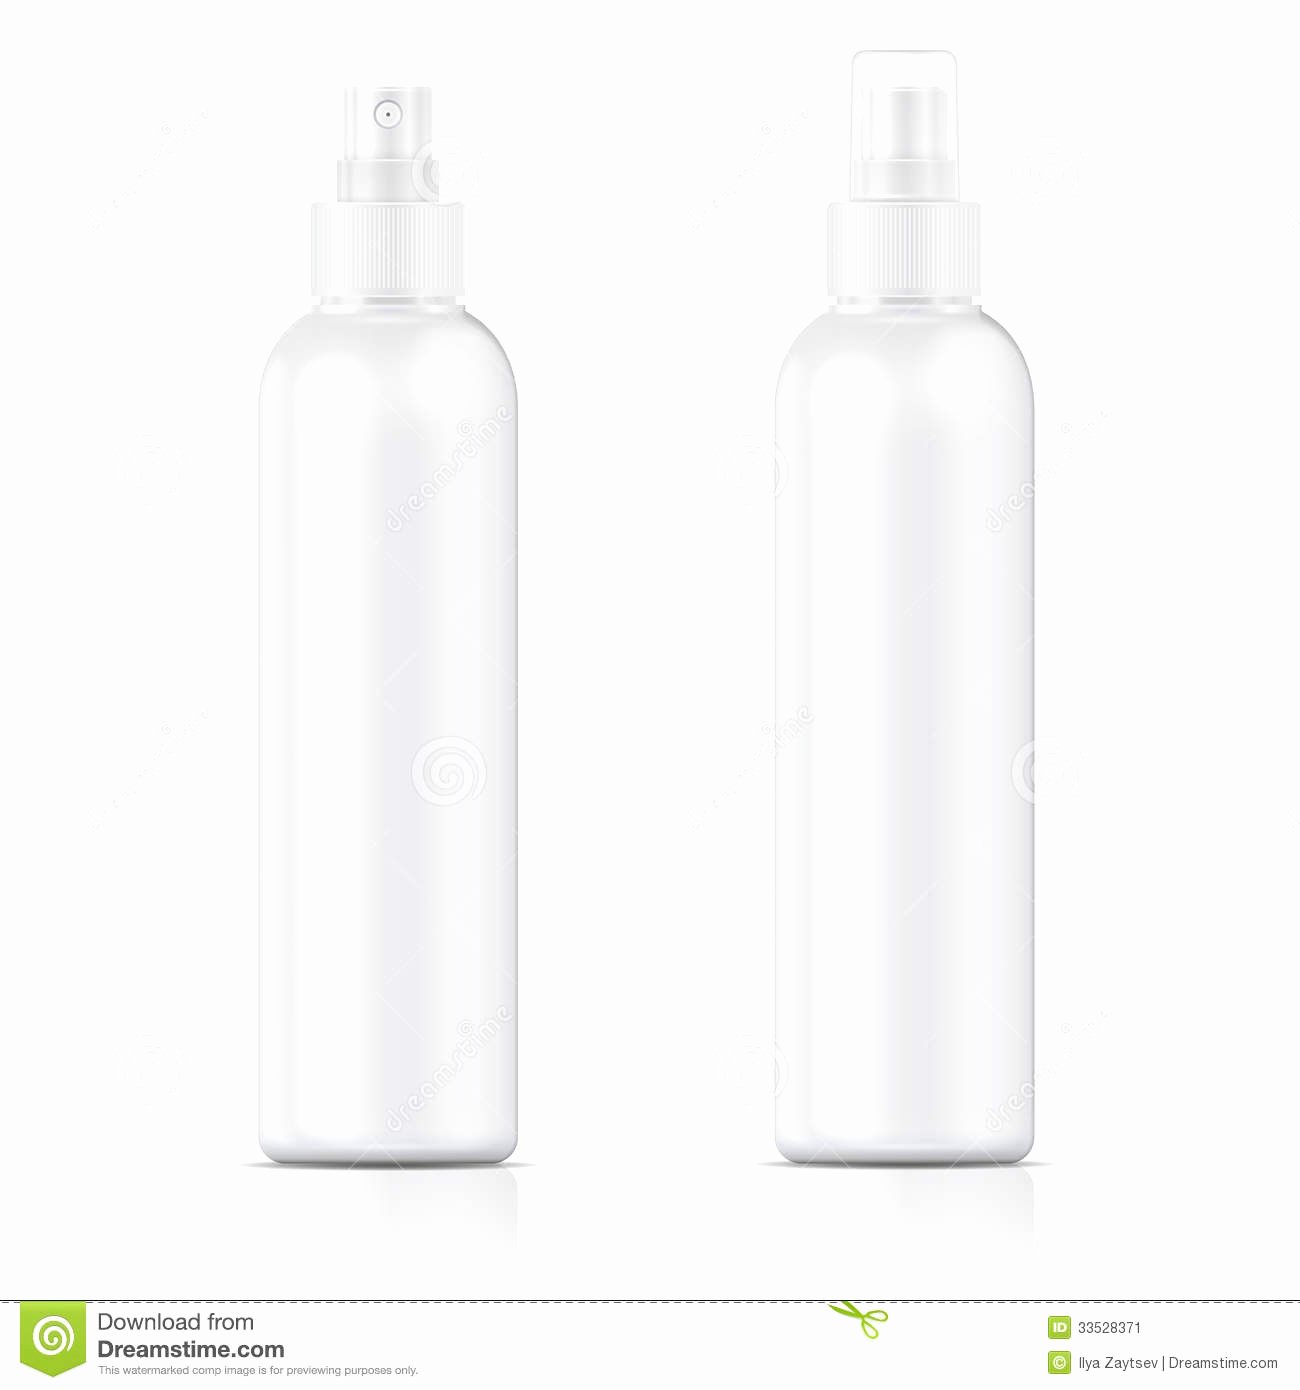 Spray Bottle Label Template Unique White Sprayer Bottle Template Stock Vector Illustration Of Blank isolated